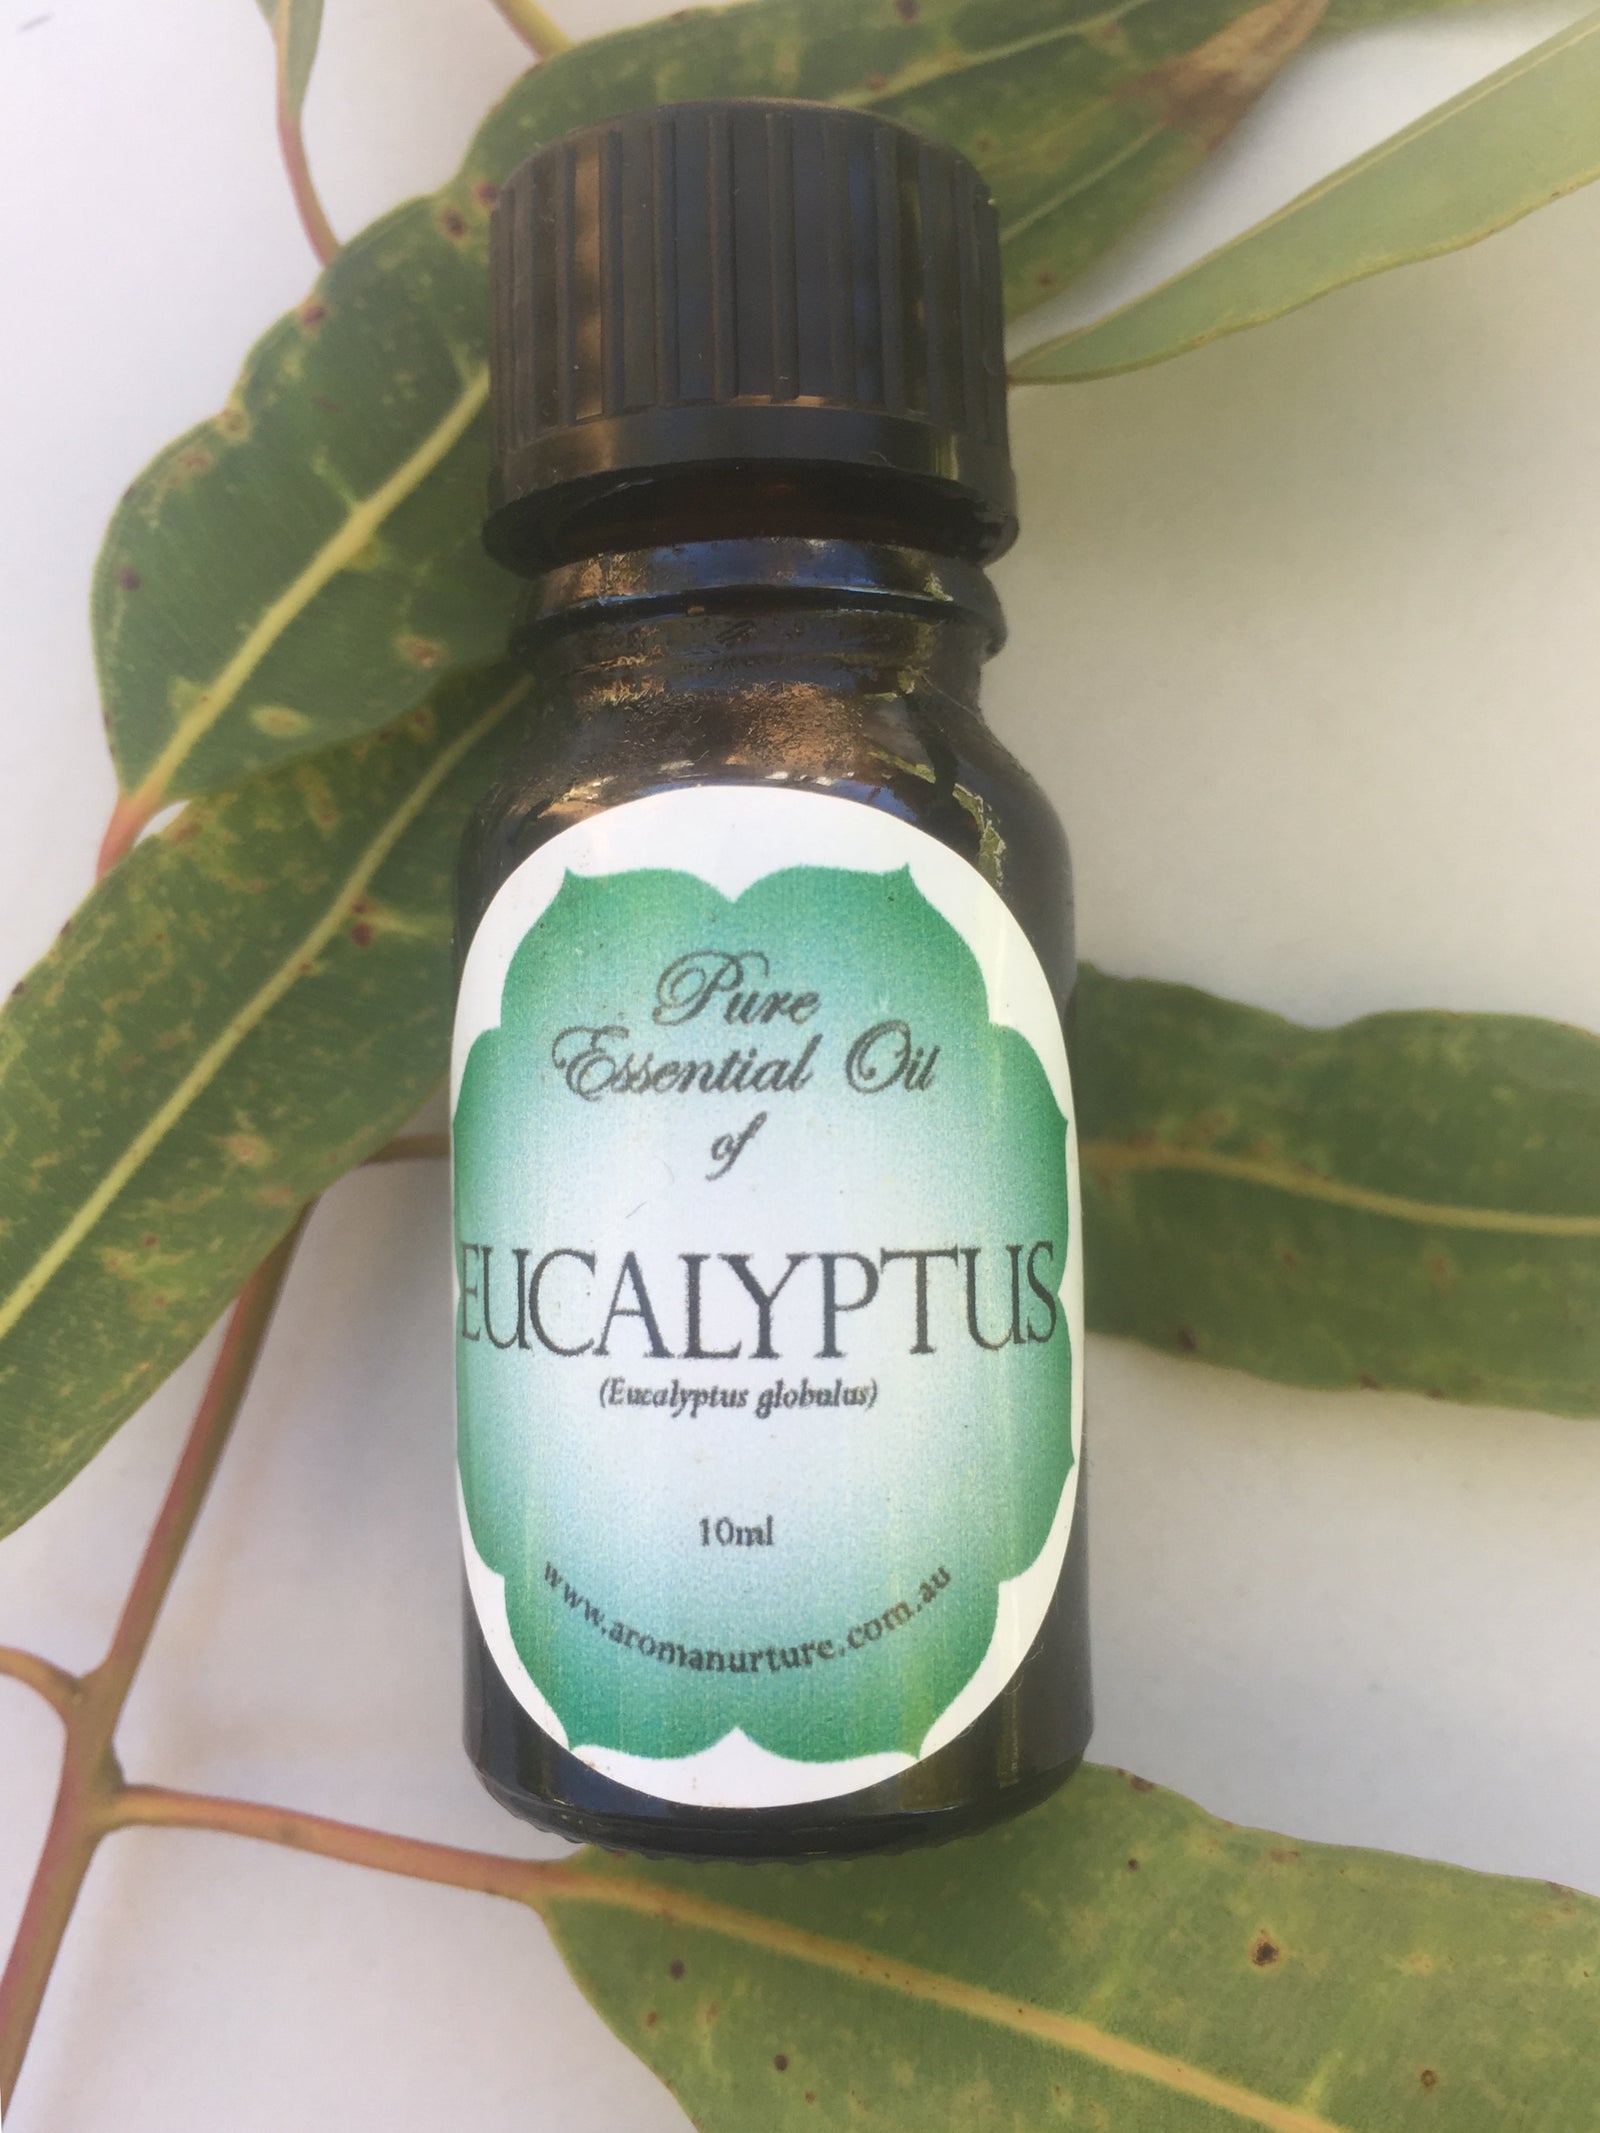 Pure essential oil of Eucalyptus 10mls.(Eucalyptus globulus).